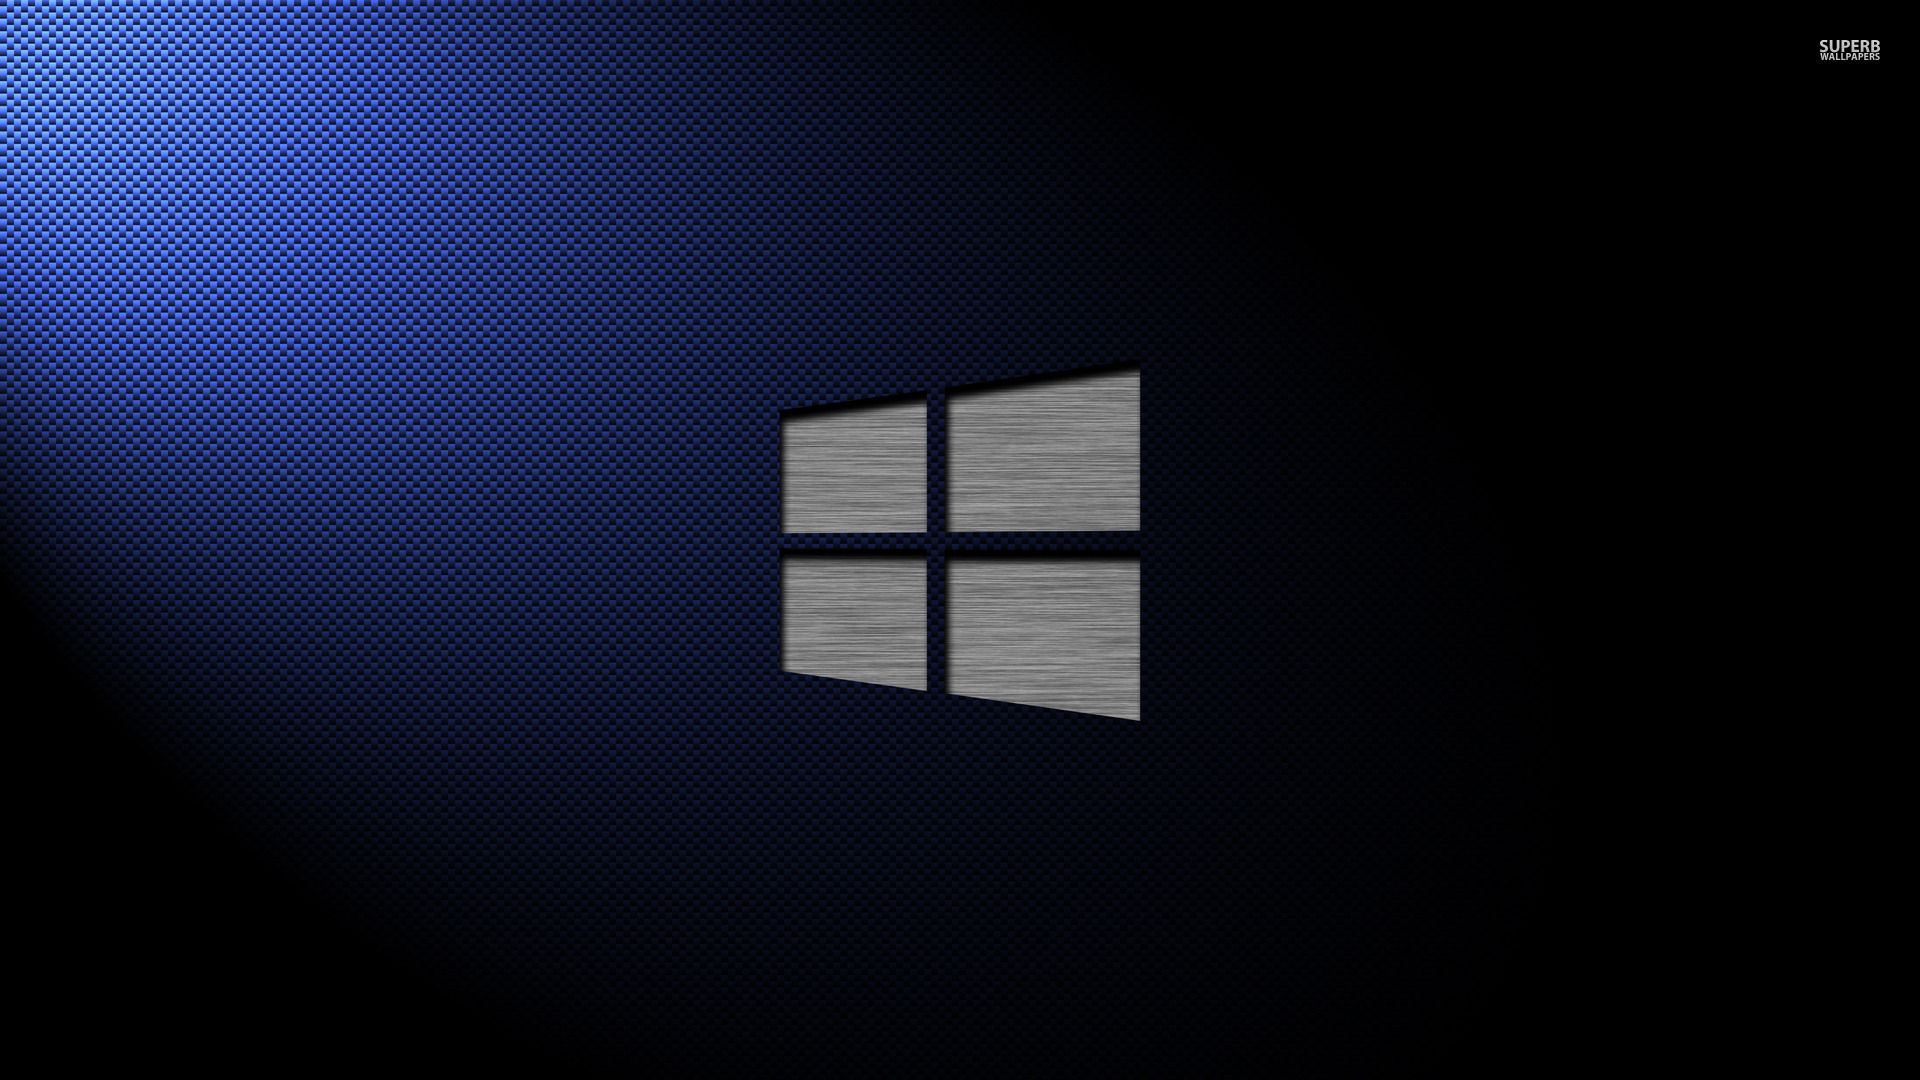 Metal Windows 10 on carbon fiber wallpaper - Computer wallpapers ...